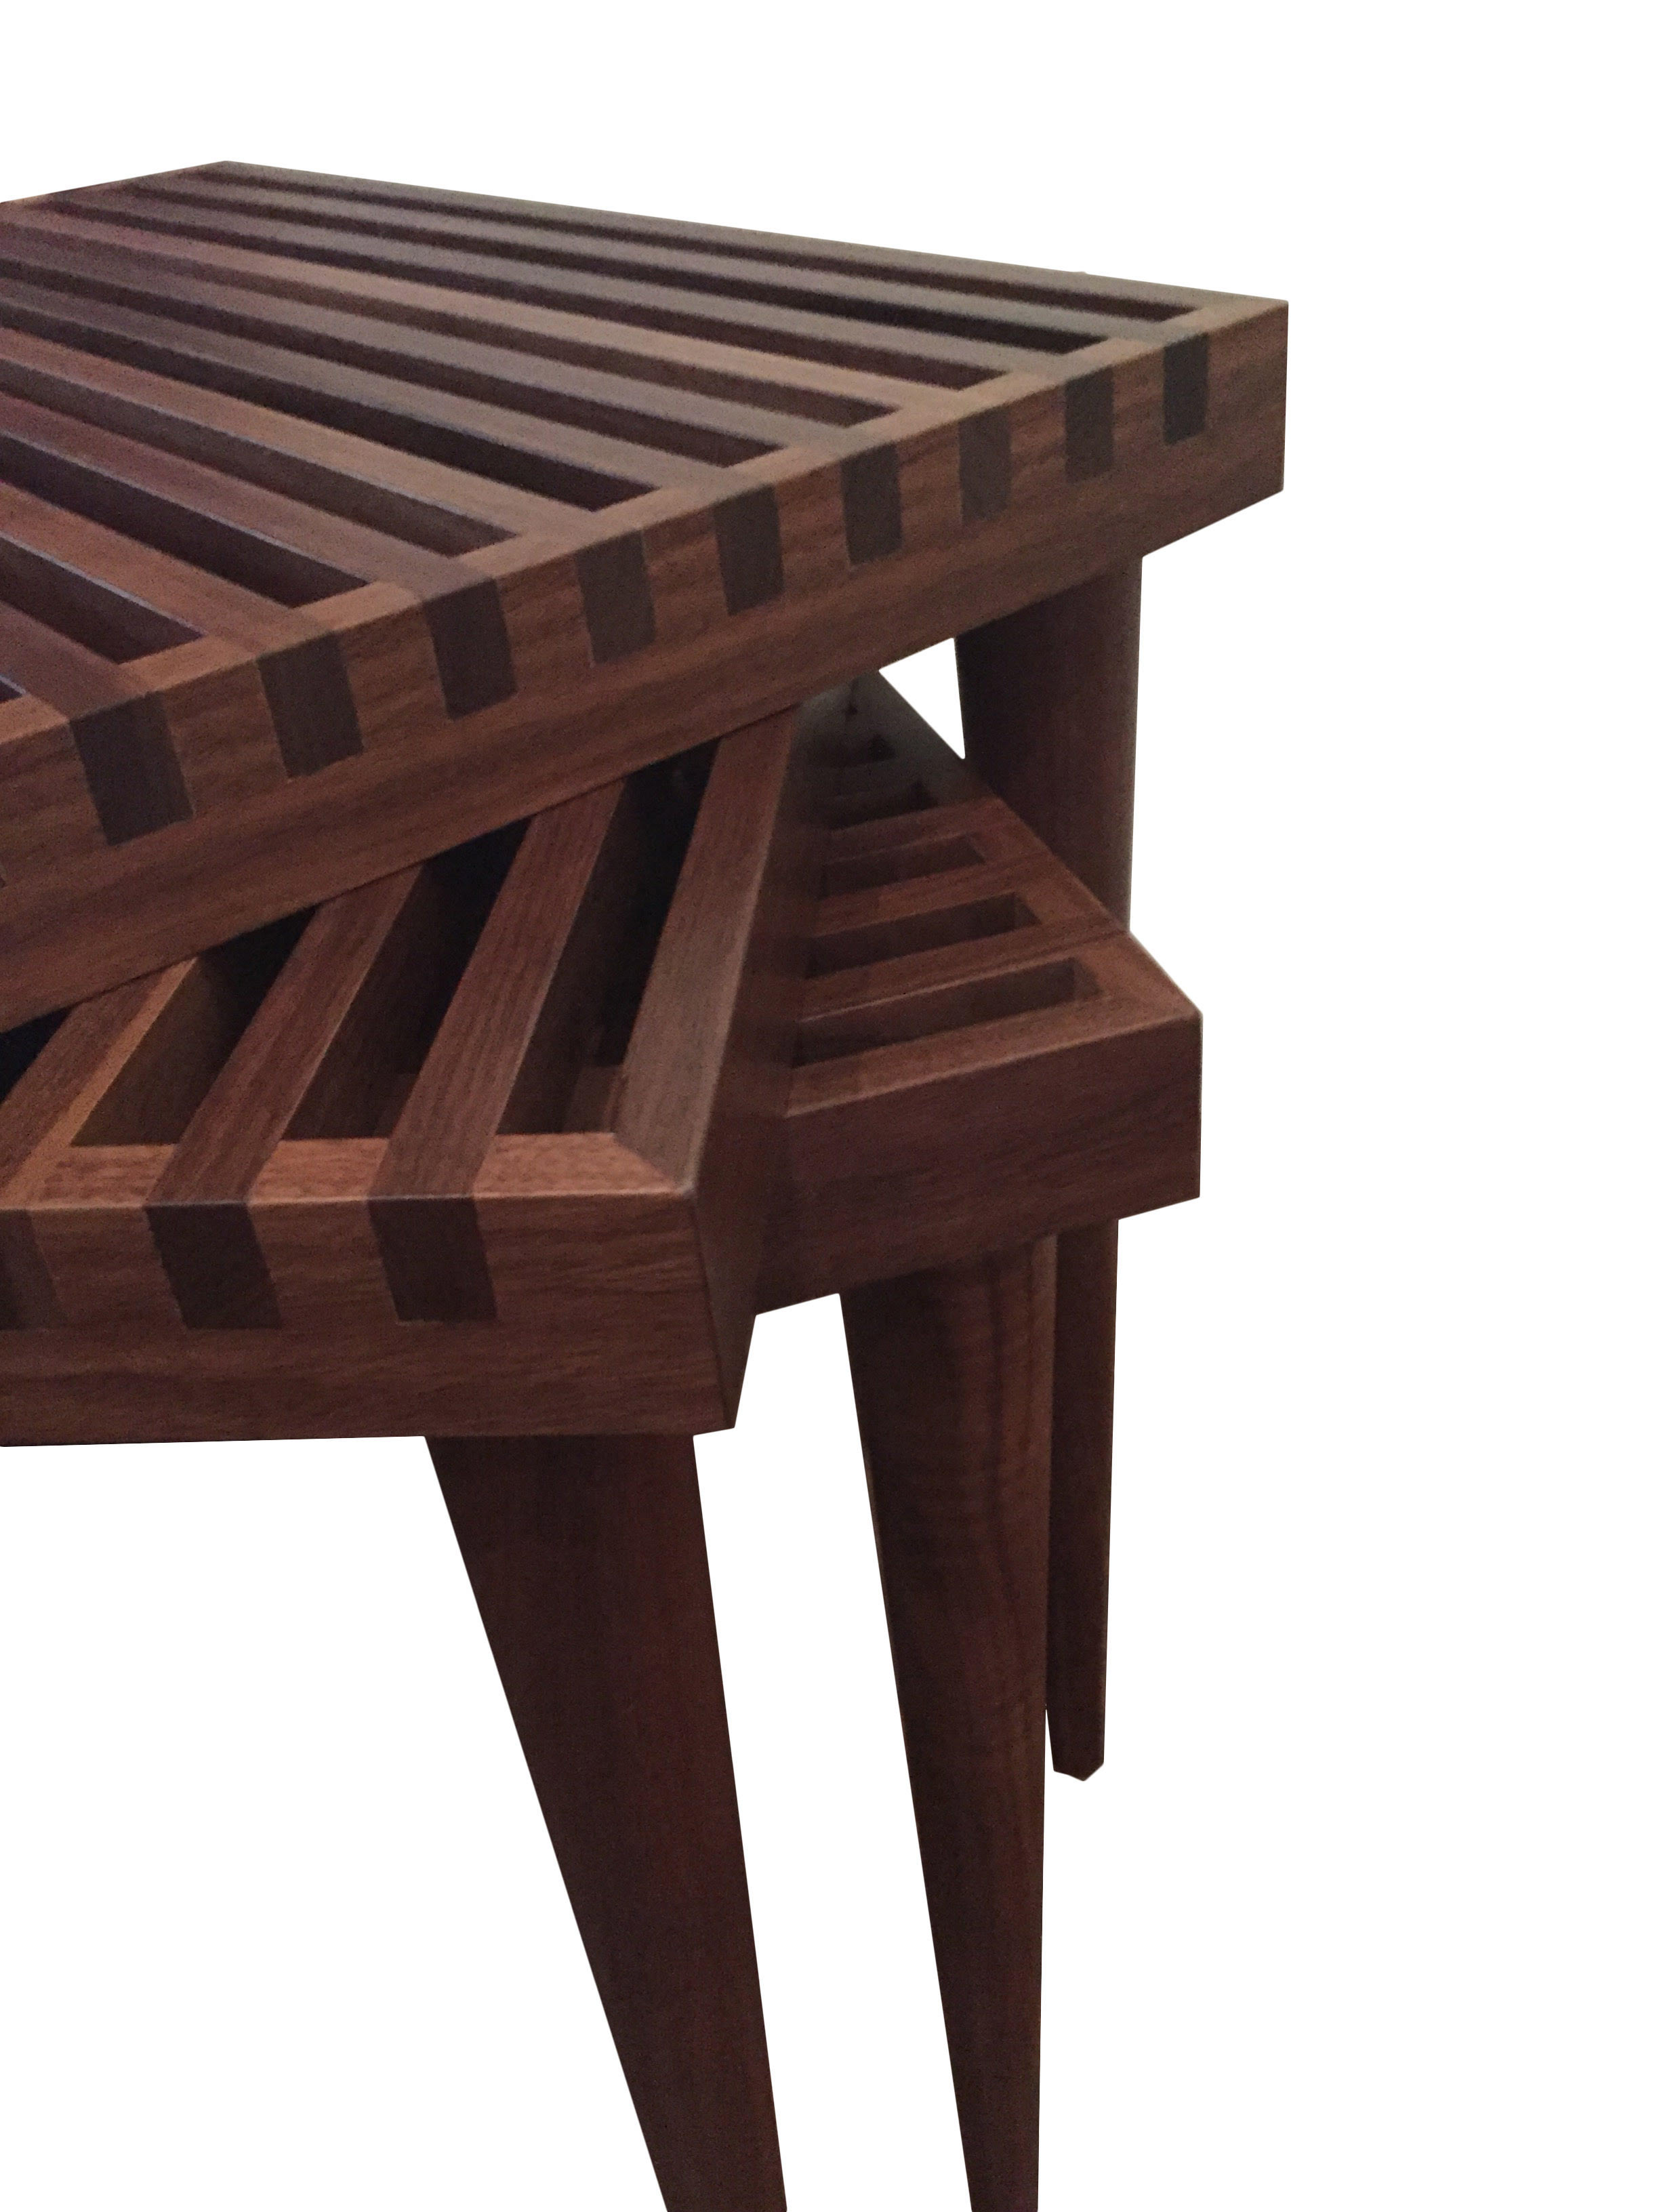 smilow-furniture-slatted-stacking-table-3-1.jpg